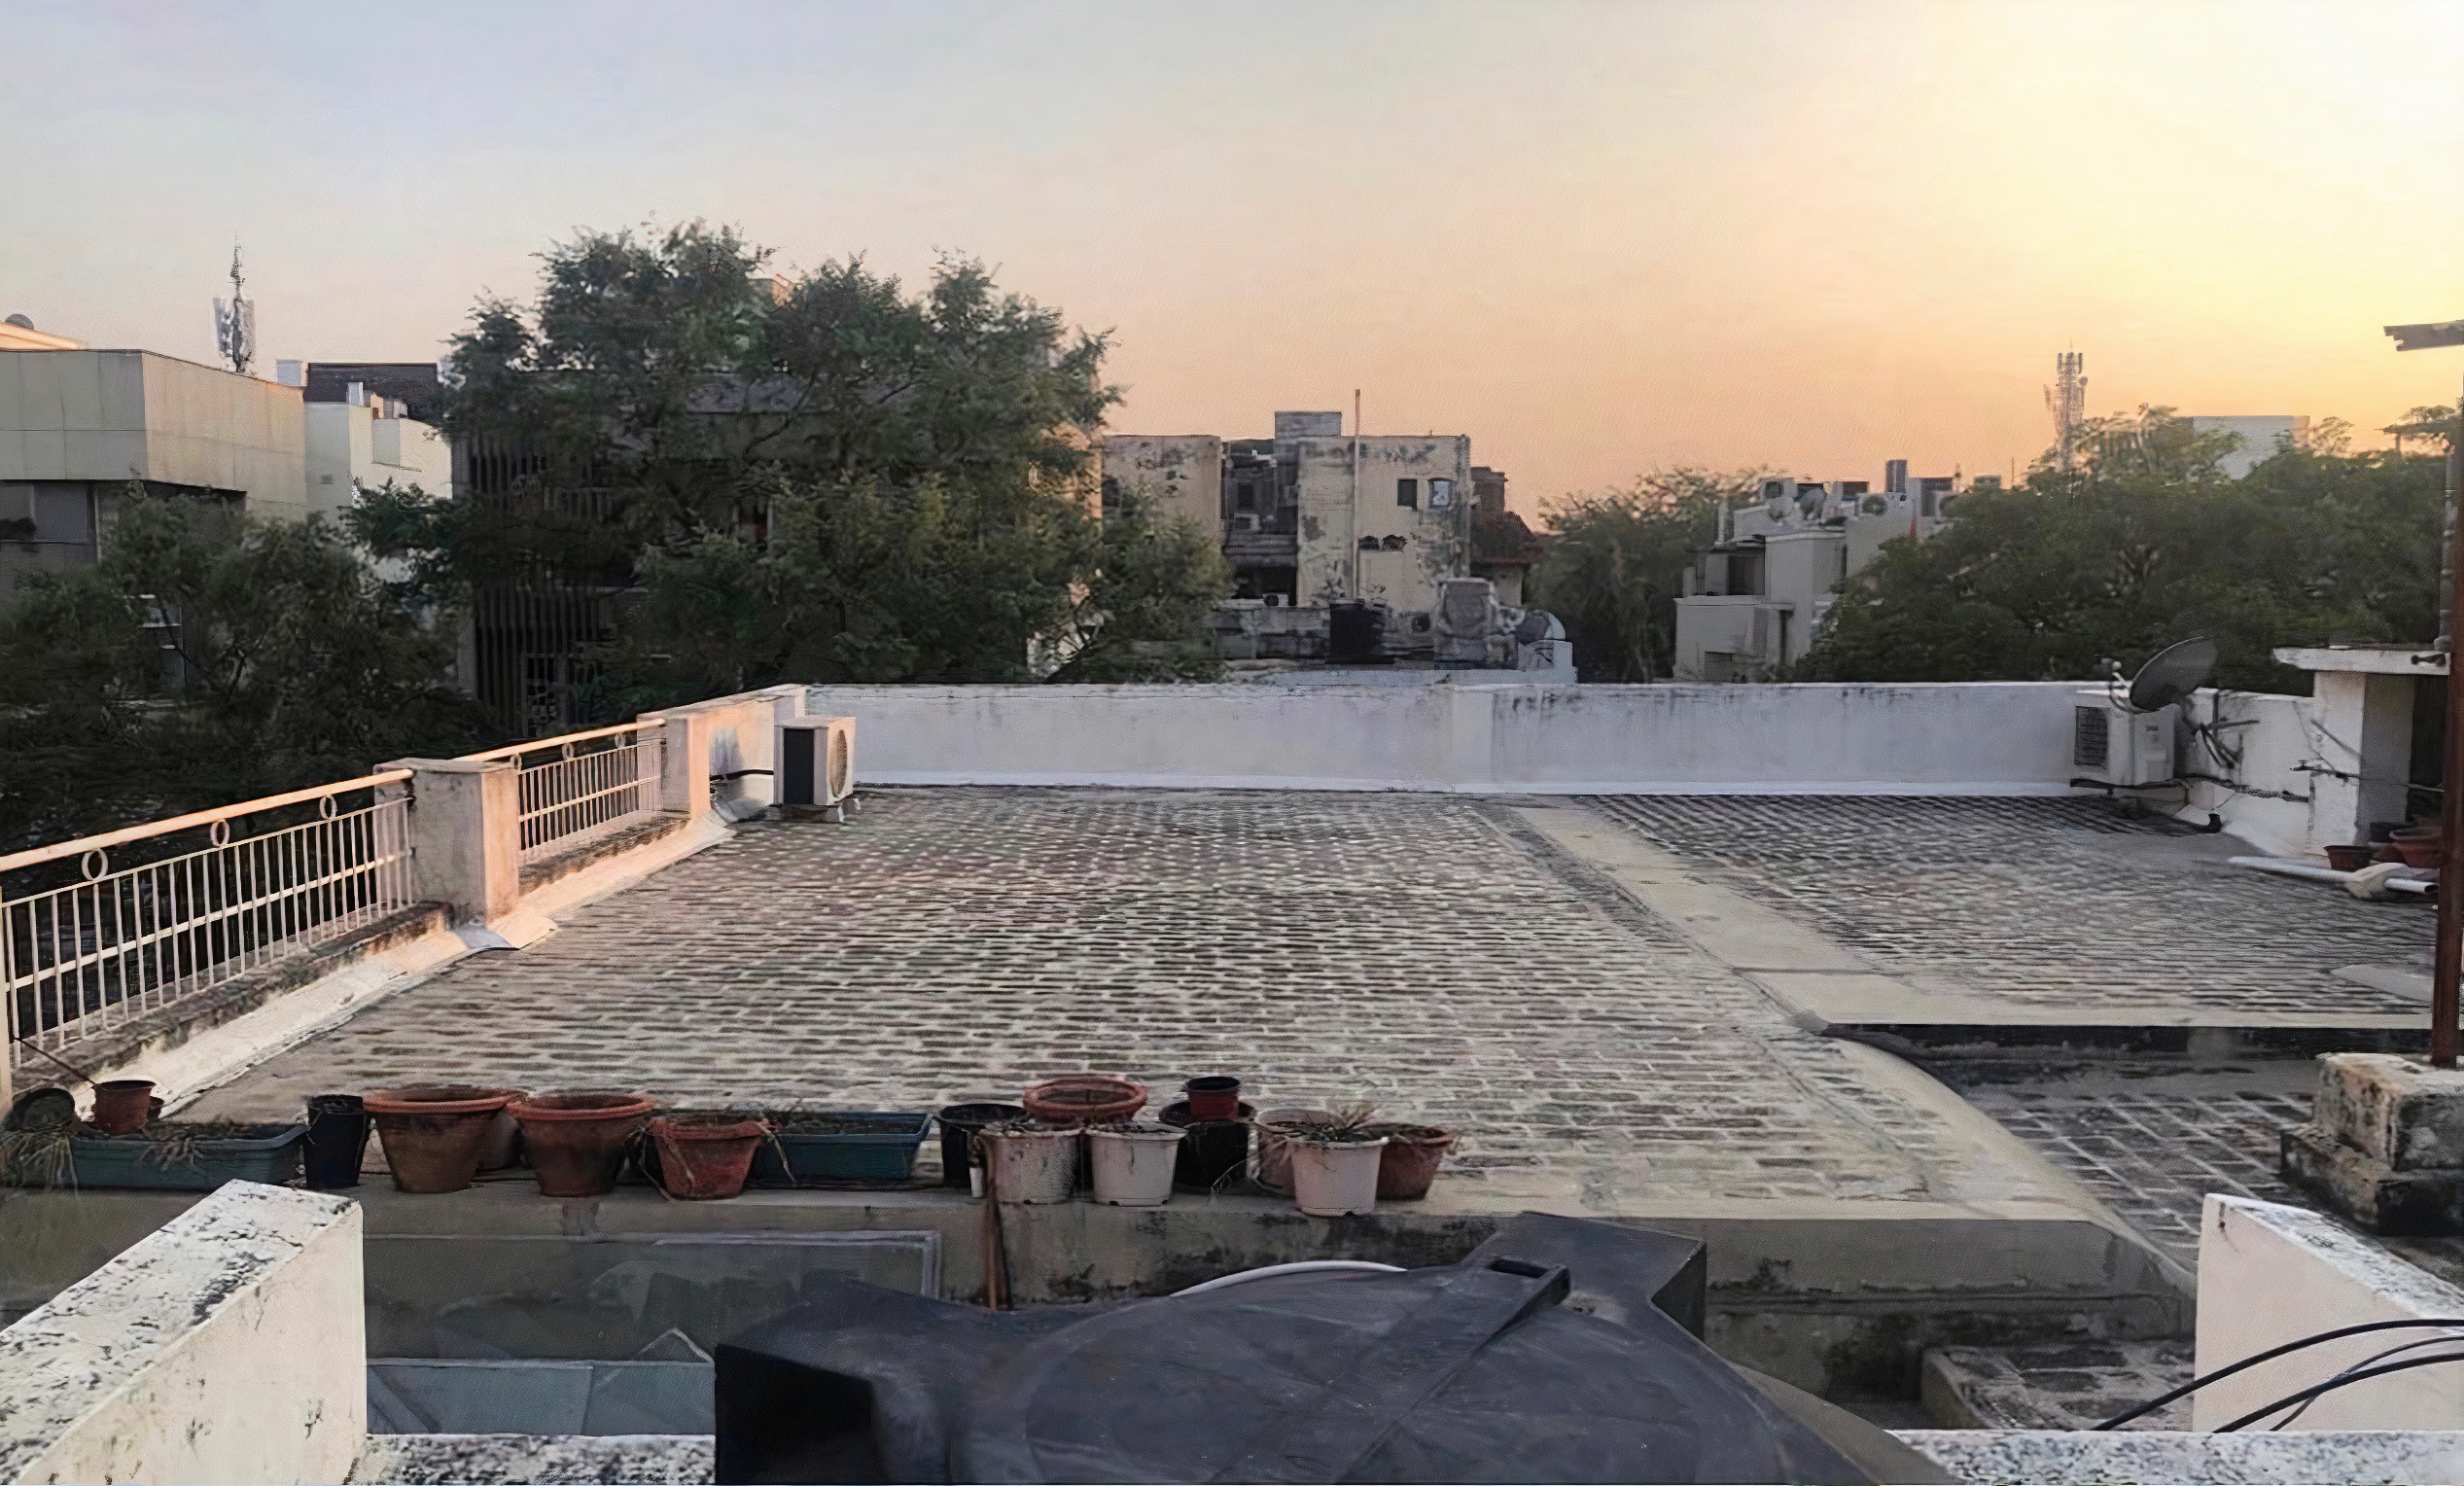 Aman's empty brick rooftop at dusk.